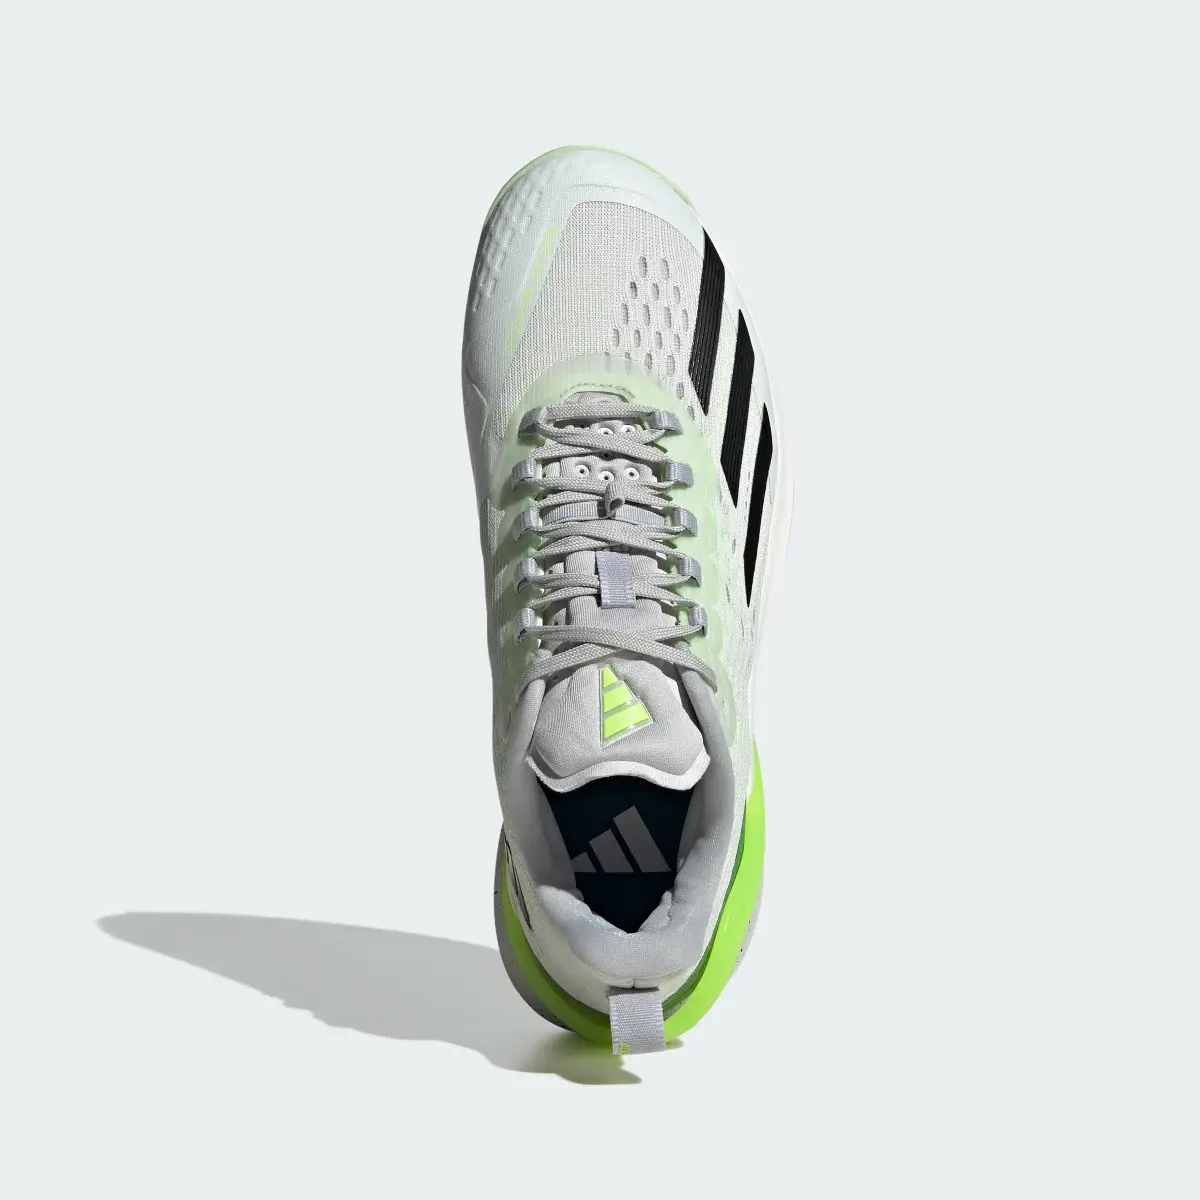 Adidas Adizero Cybersonic Tennisschuh. 3